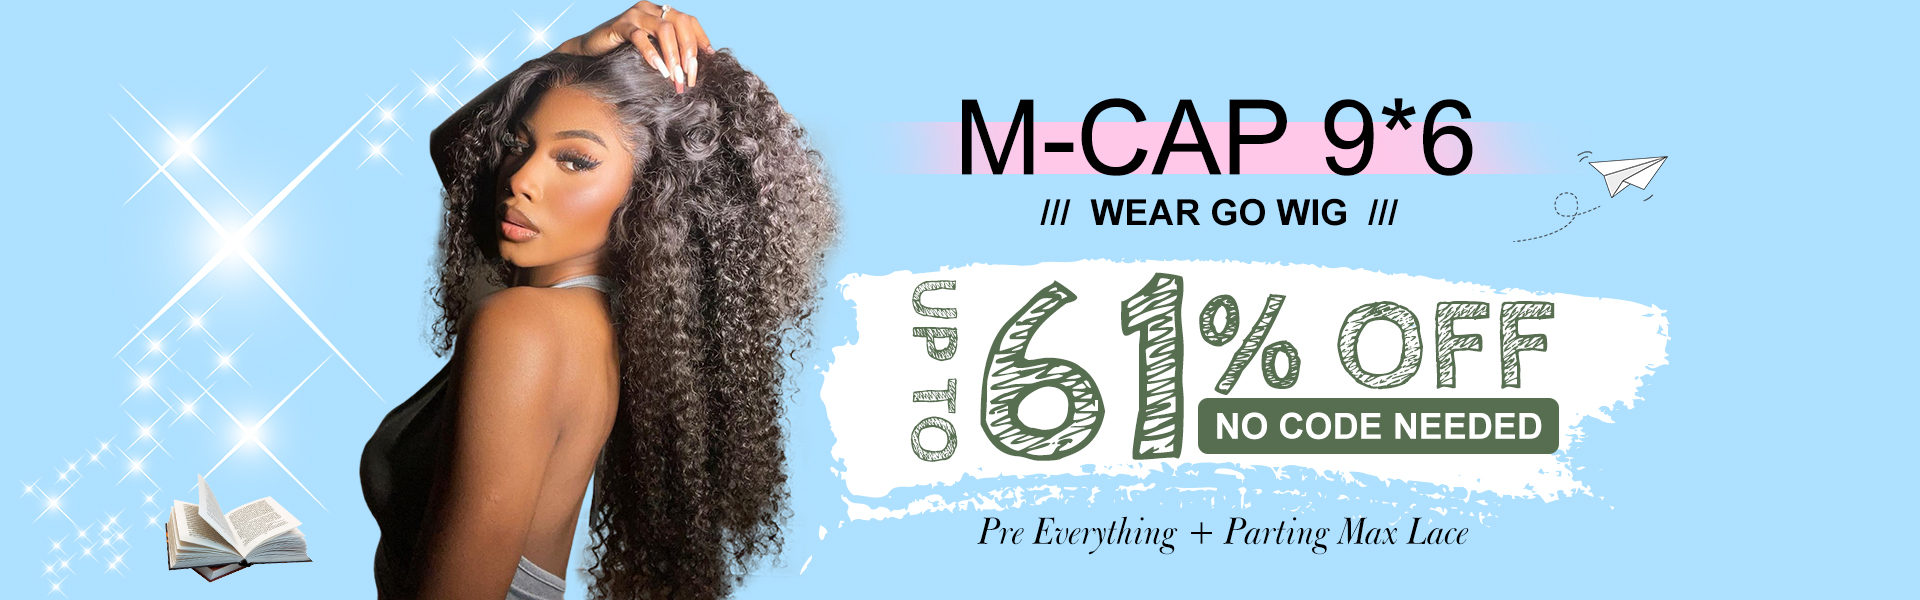 Upgrade Mcap 9x6 Wear Go Wig